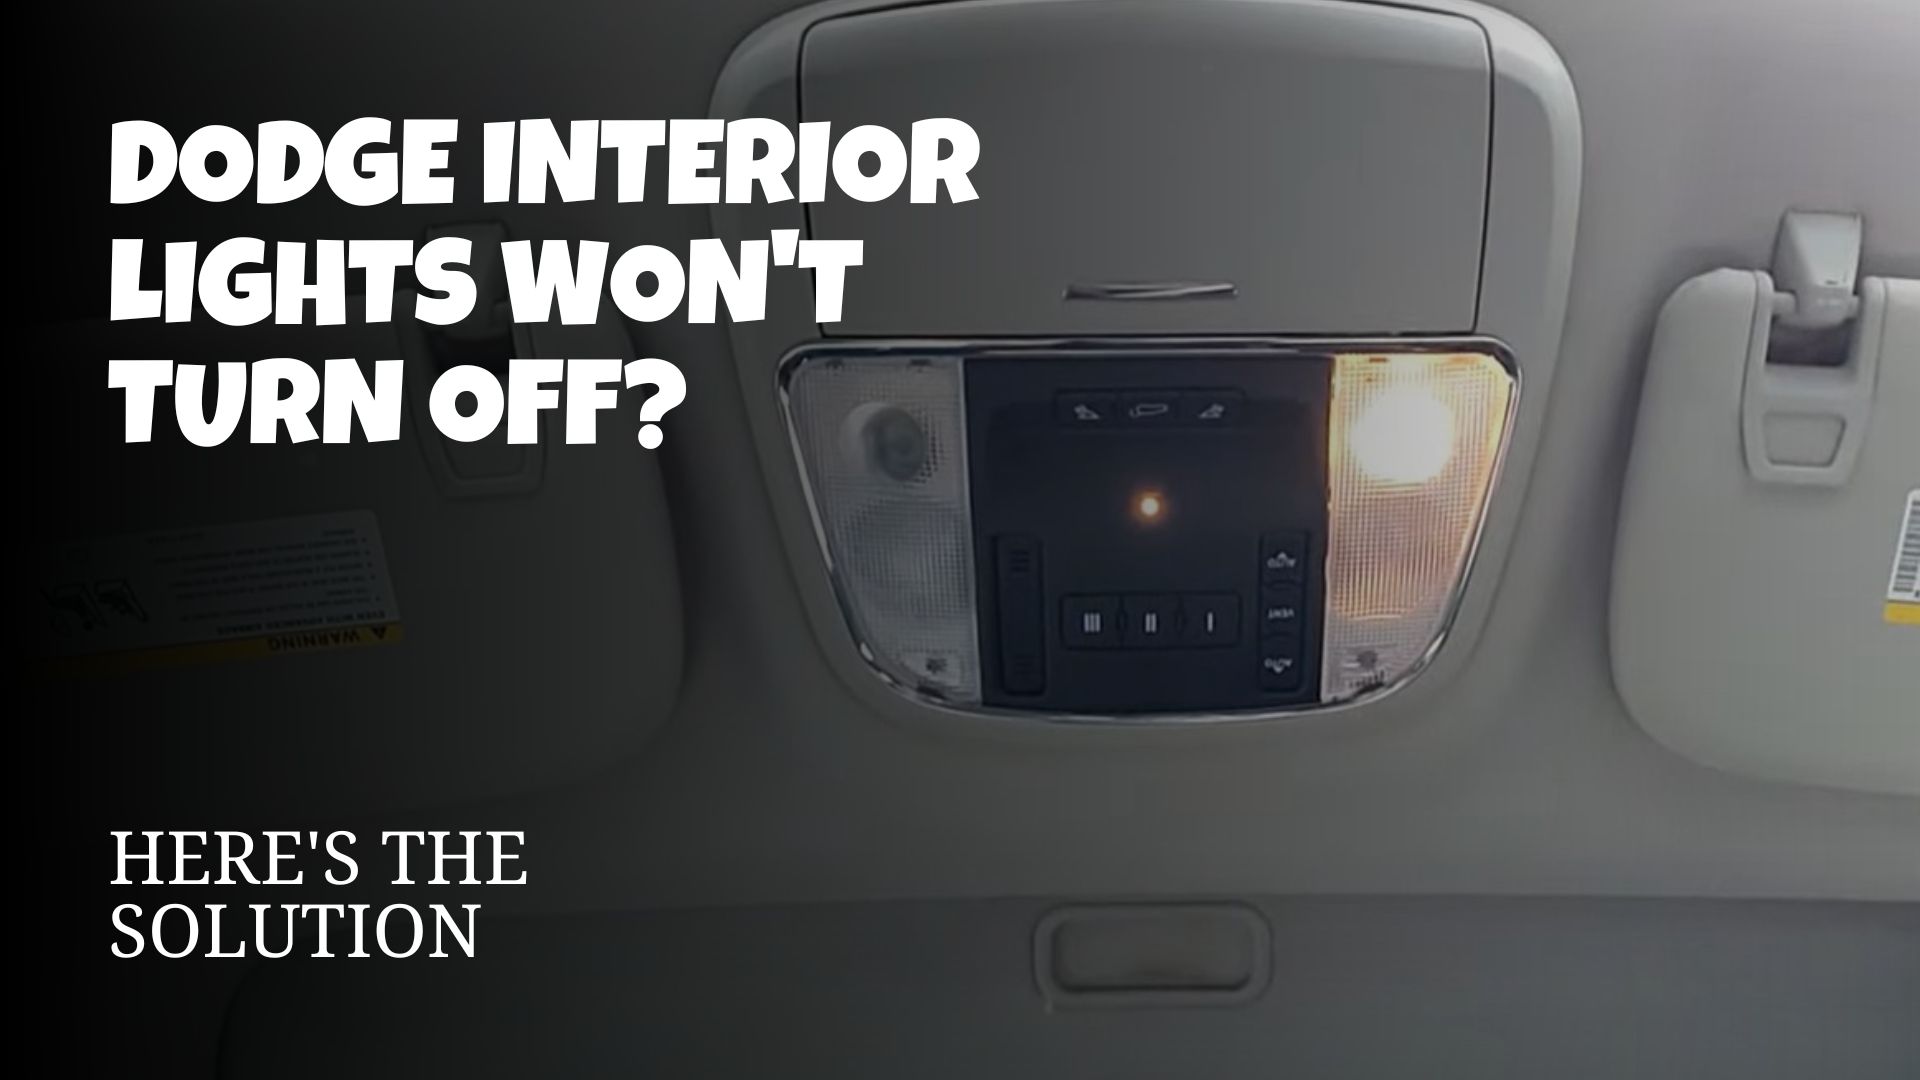 Dodge interior lights won't turn off